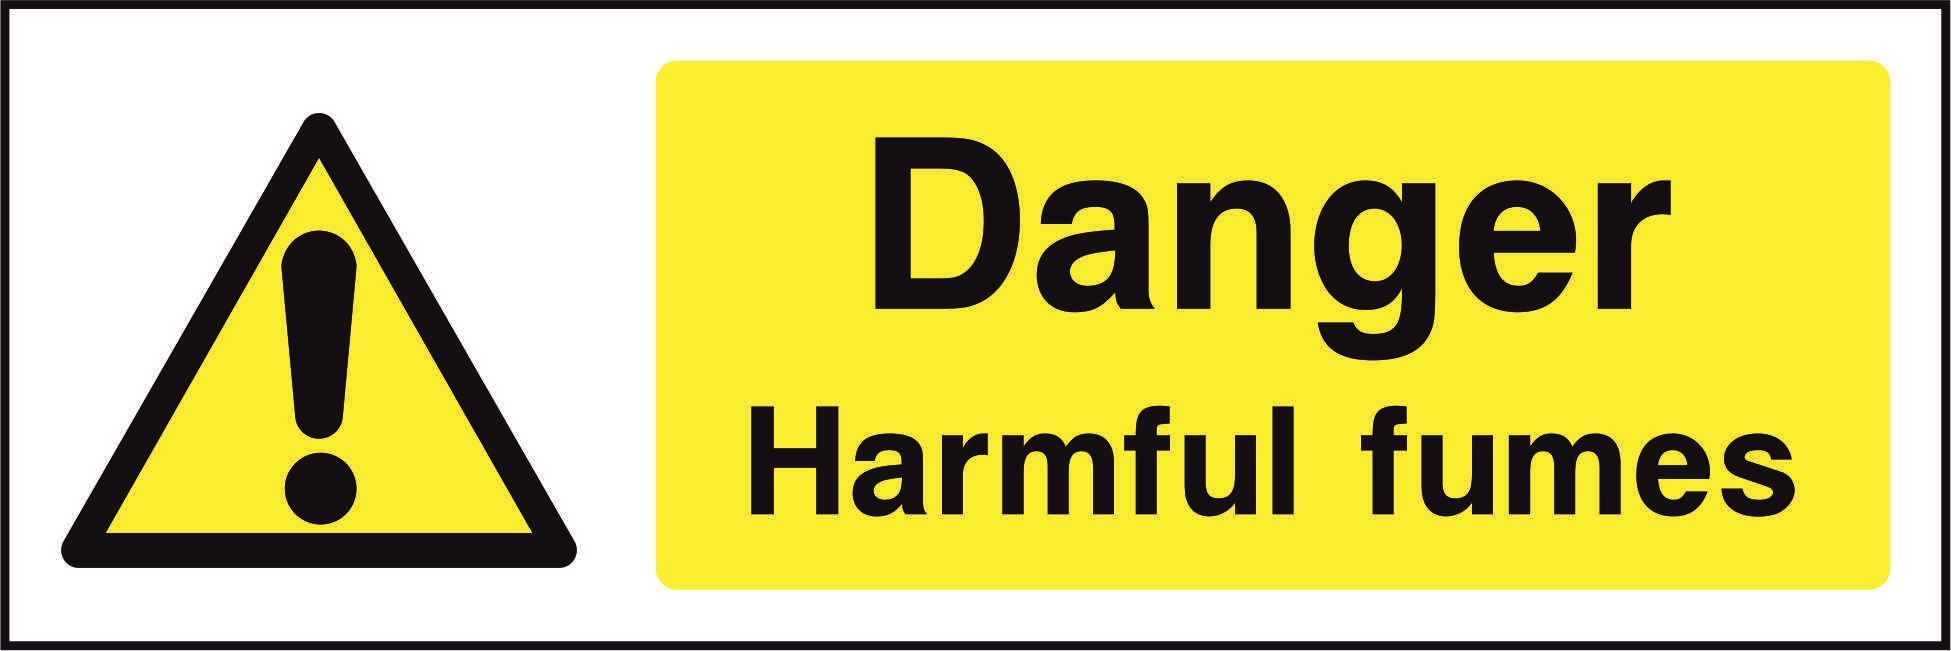 Danger Harmful fumes